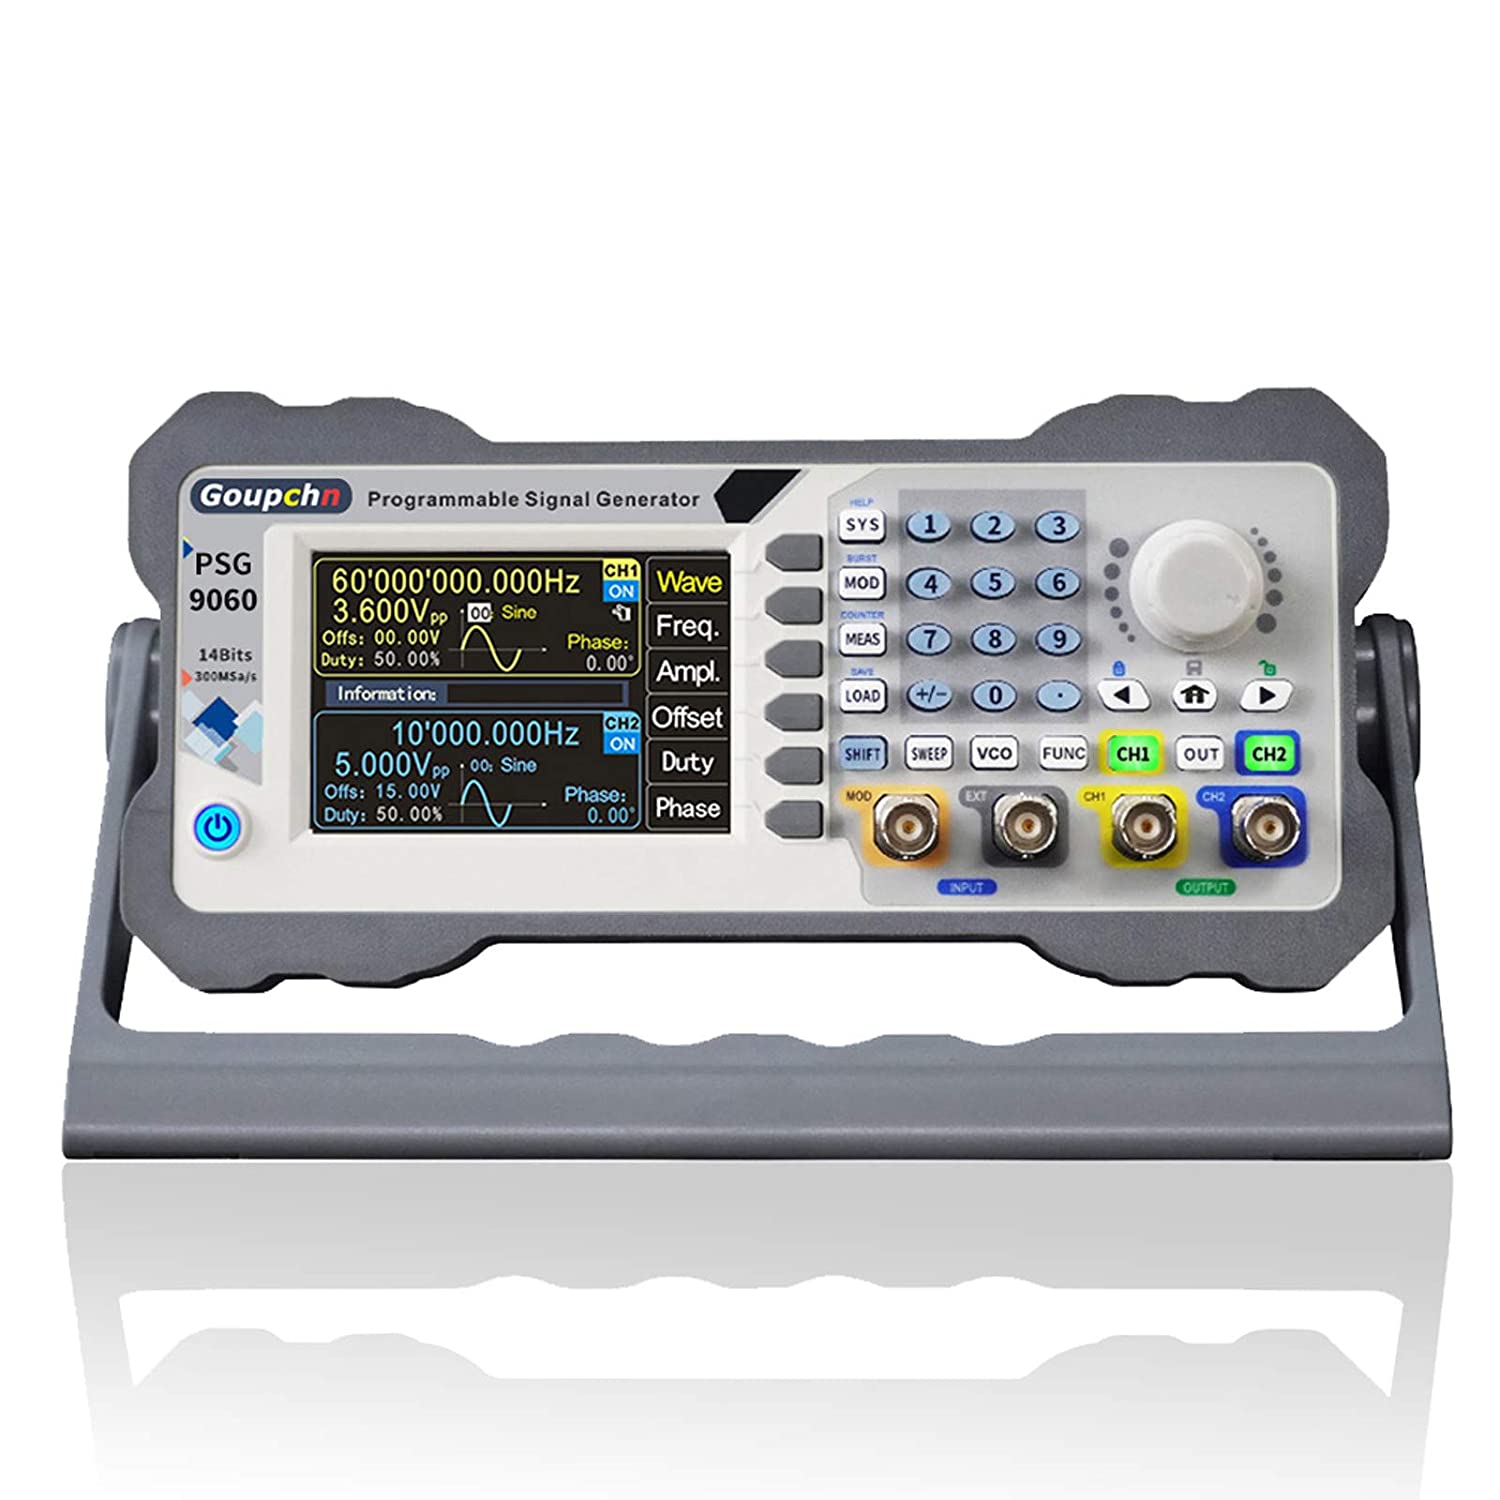 Goupchn Generador de señal DDS programable de 60 MHz de doble canal arbitrario función de onda generador medidor de frecuencia con módulo inalámbrico de control de teléfono celular fuente de señal